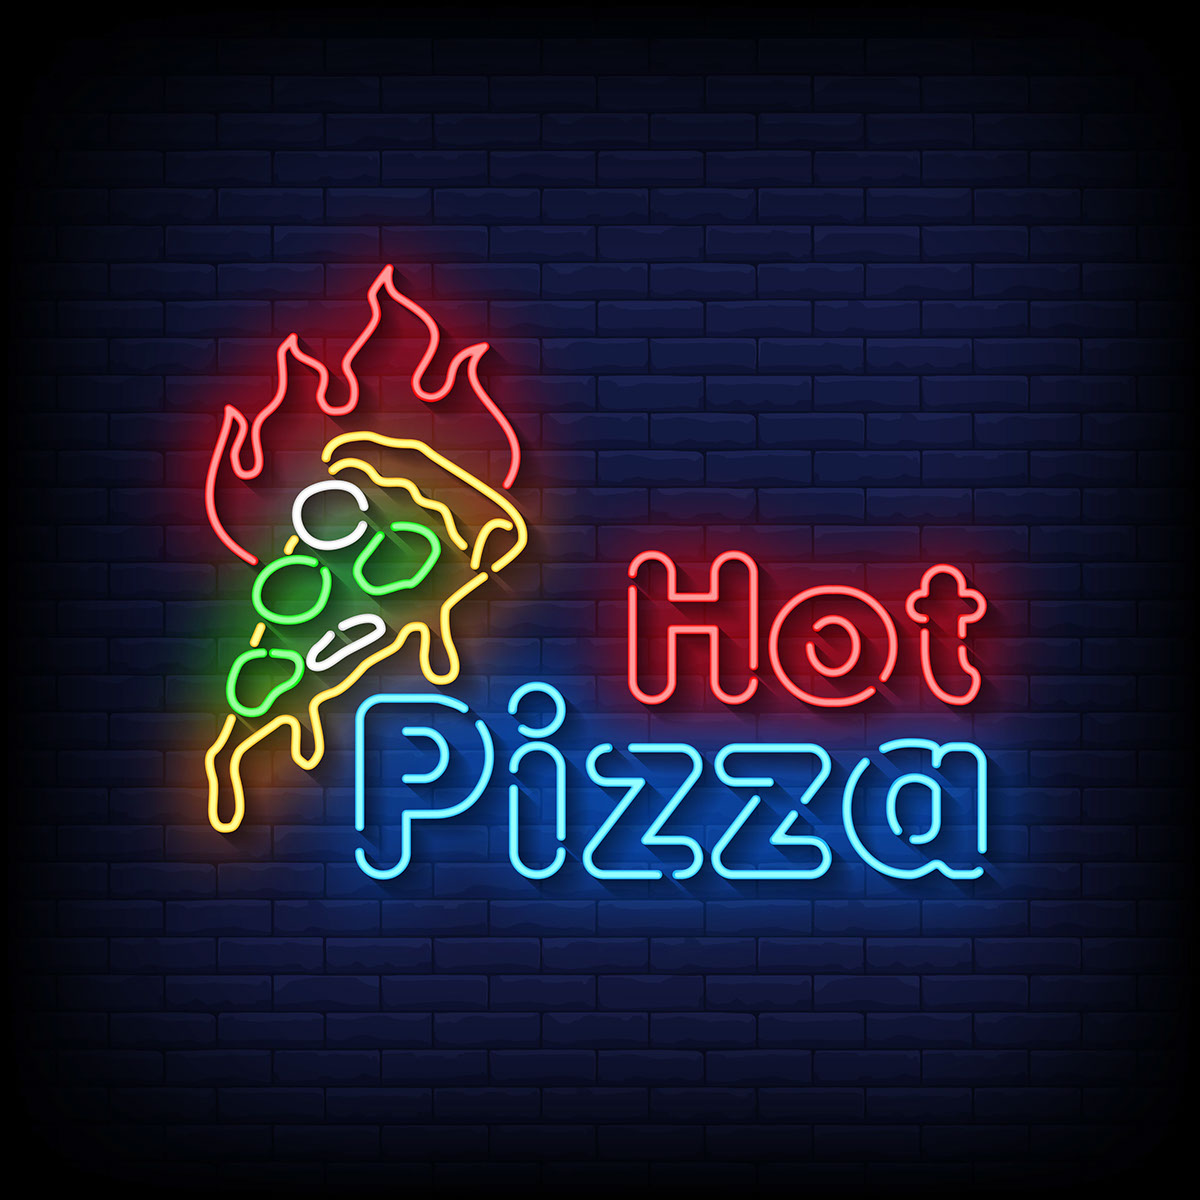 Hot Pizza rendition image